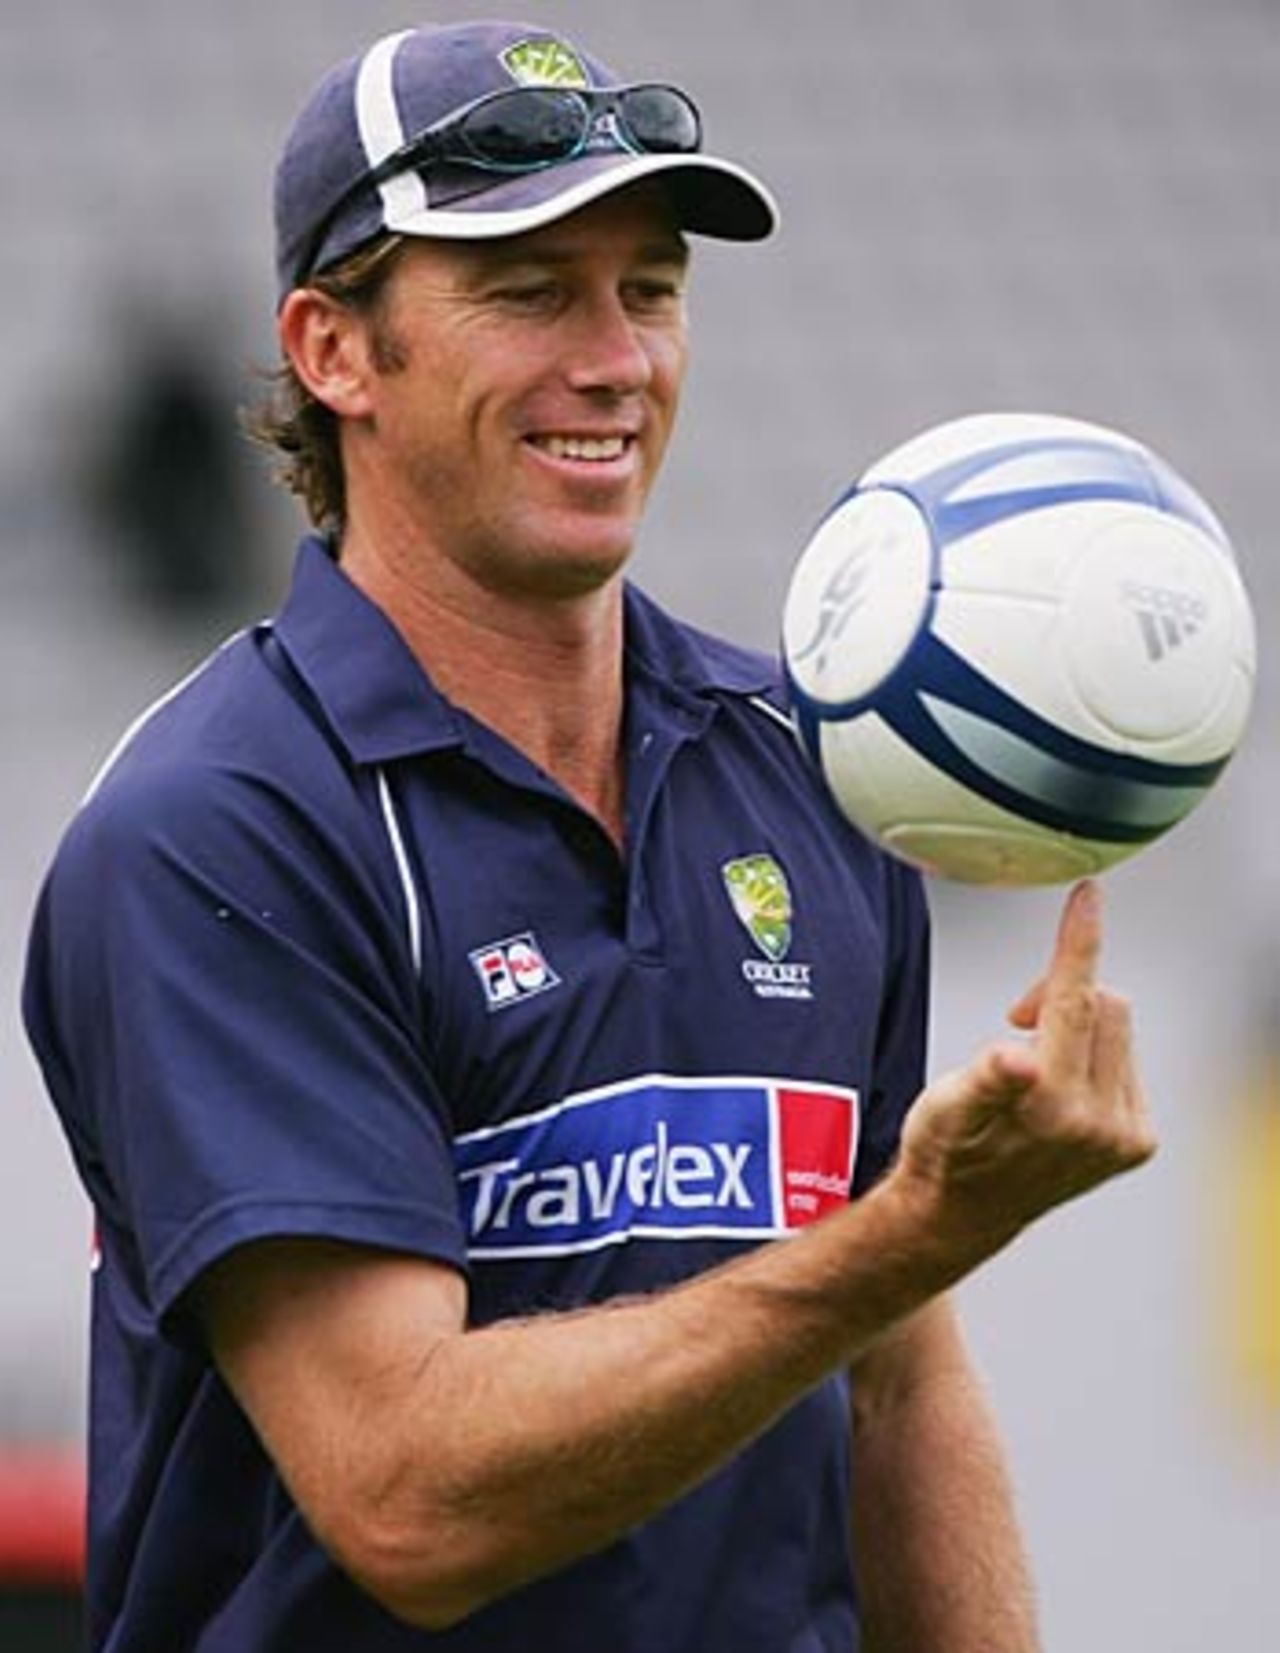 Glenn McGrath shows his ball skills, Auckland, March 24, 2005